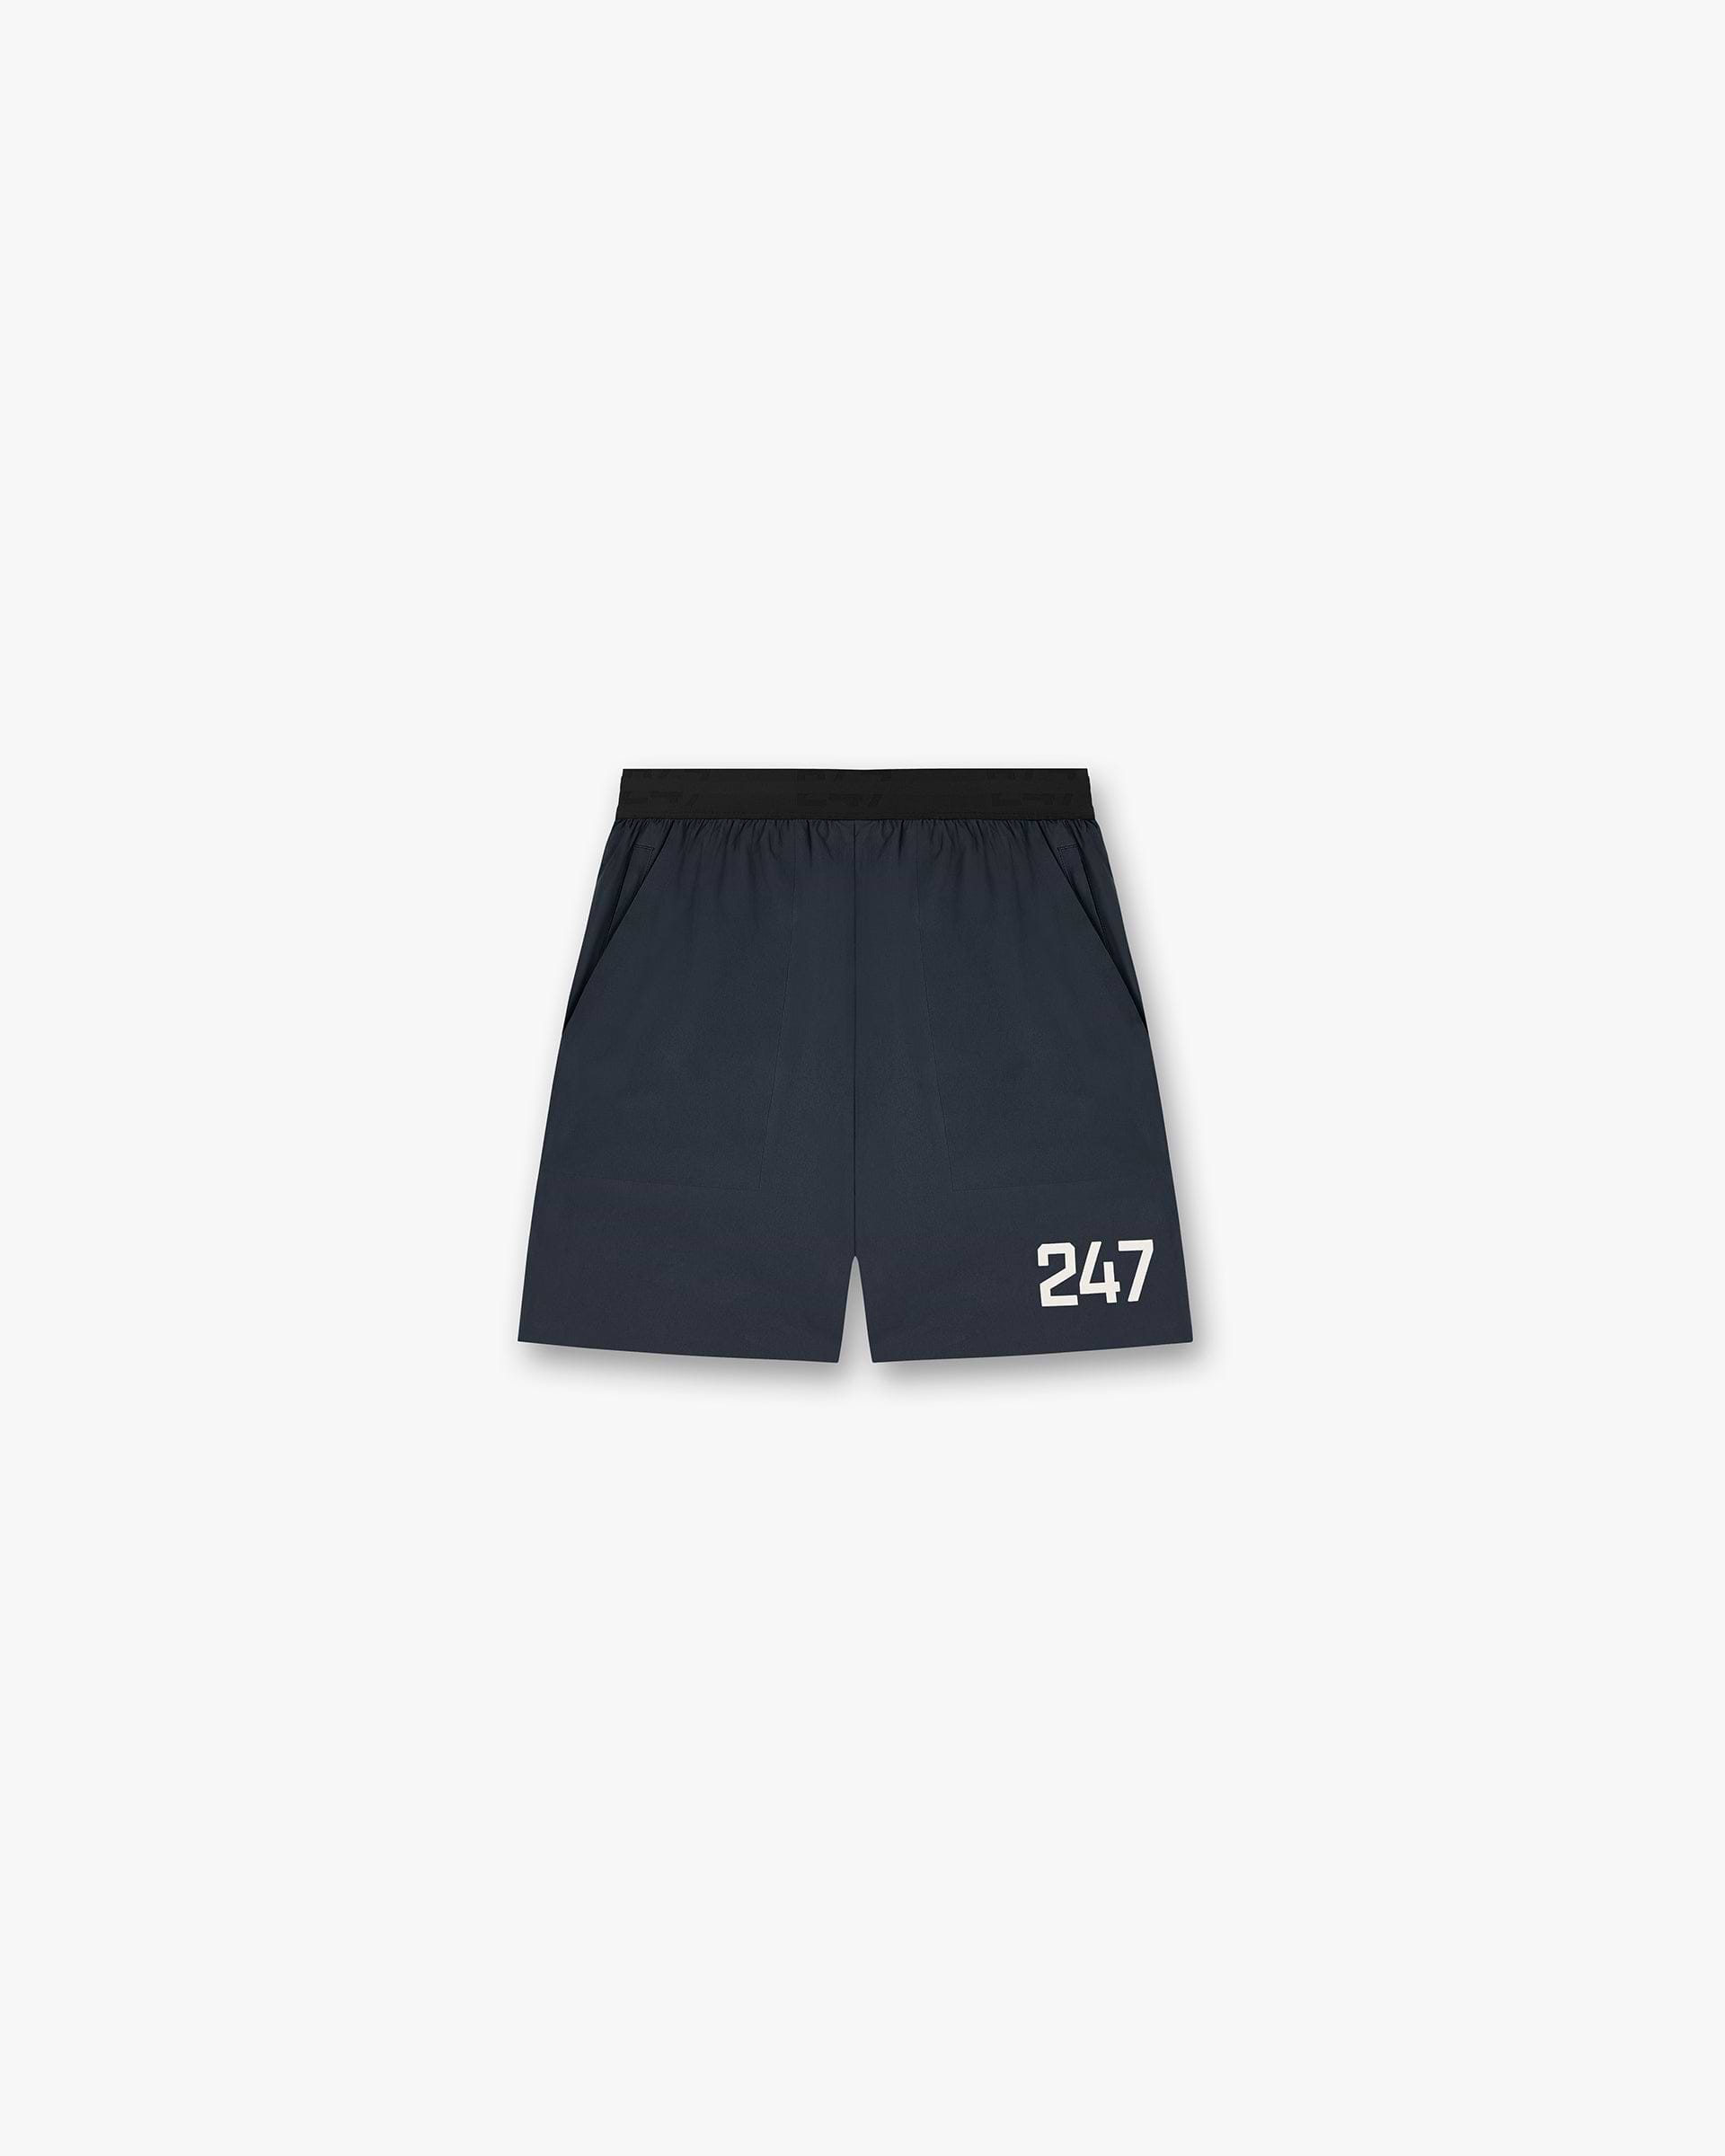 247 Shorts, Gym Shorts